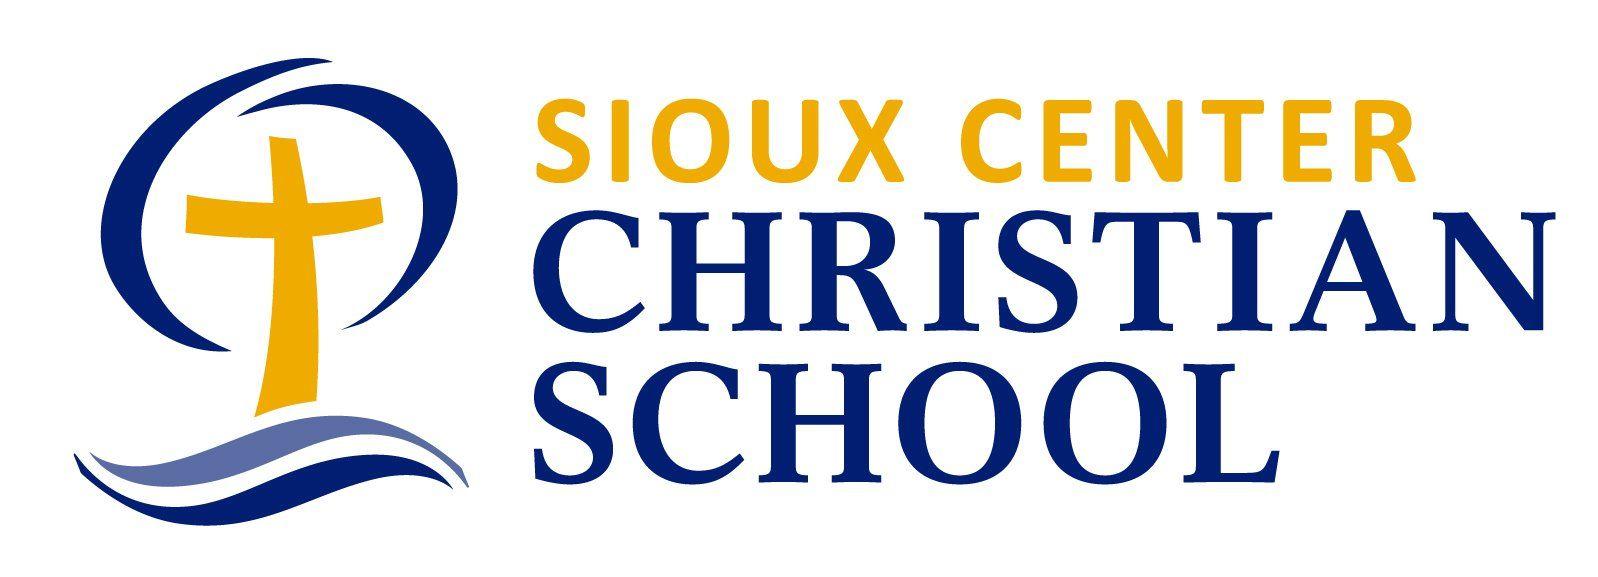 Chritian Logo - Our Logos - Sioux Center Christian School